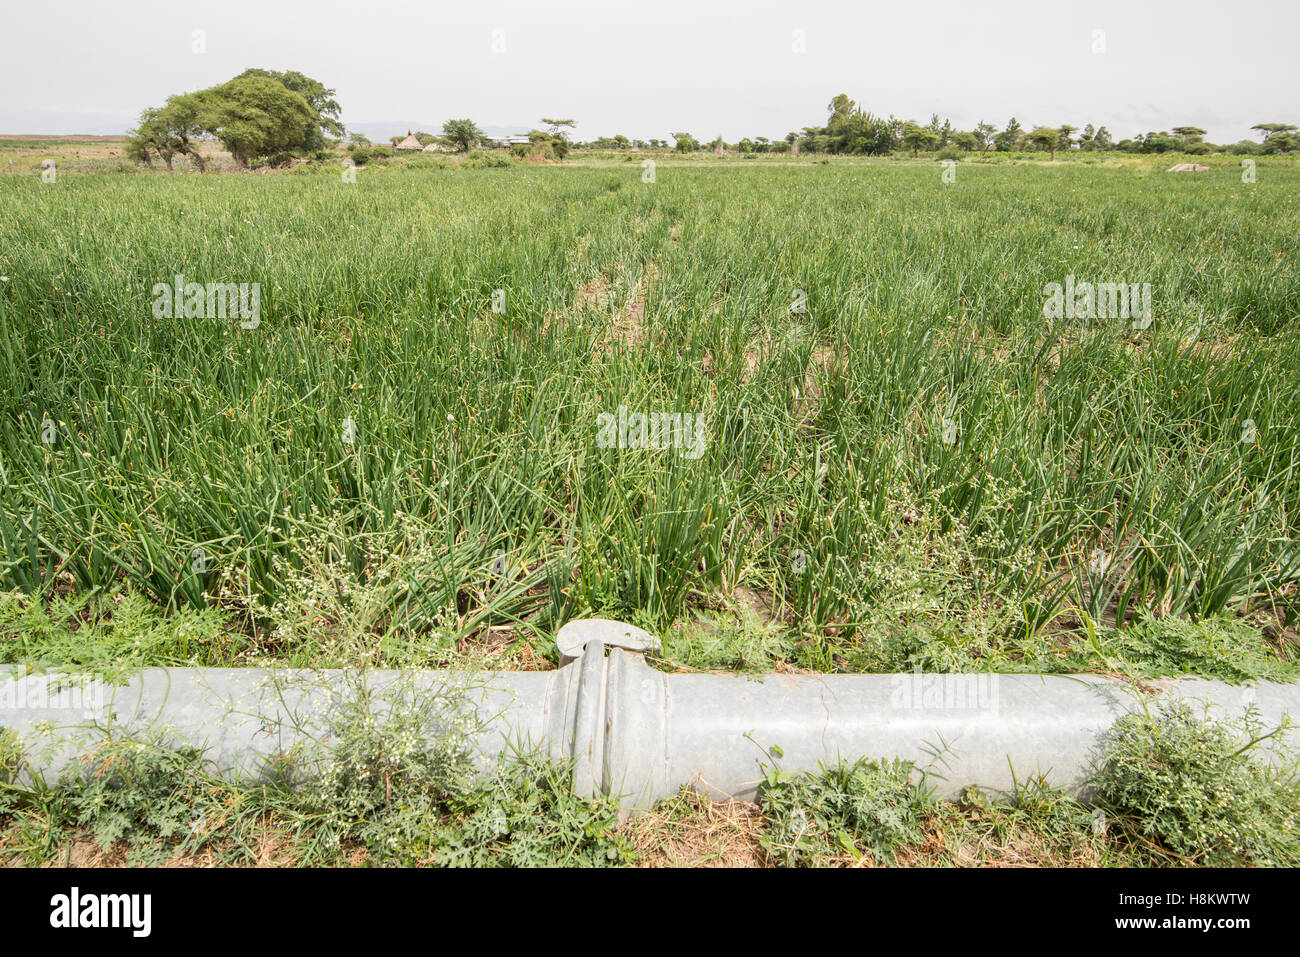 Meki Batu, Ethiopia - Rows of onion plants in a field at the Fruit and Vegetable Growers Cooperative in Meki Batu. Stock Photo